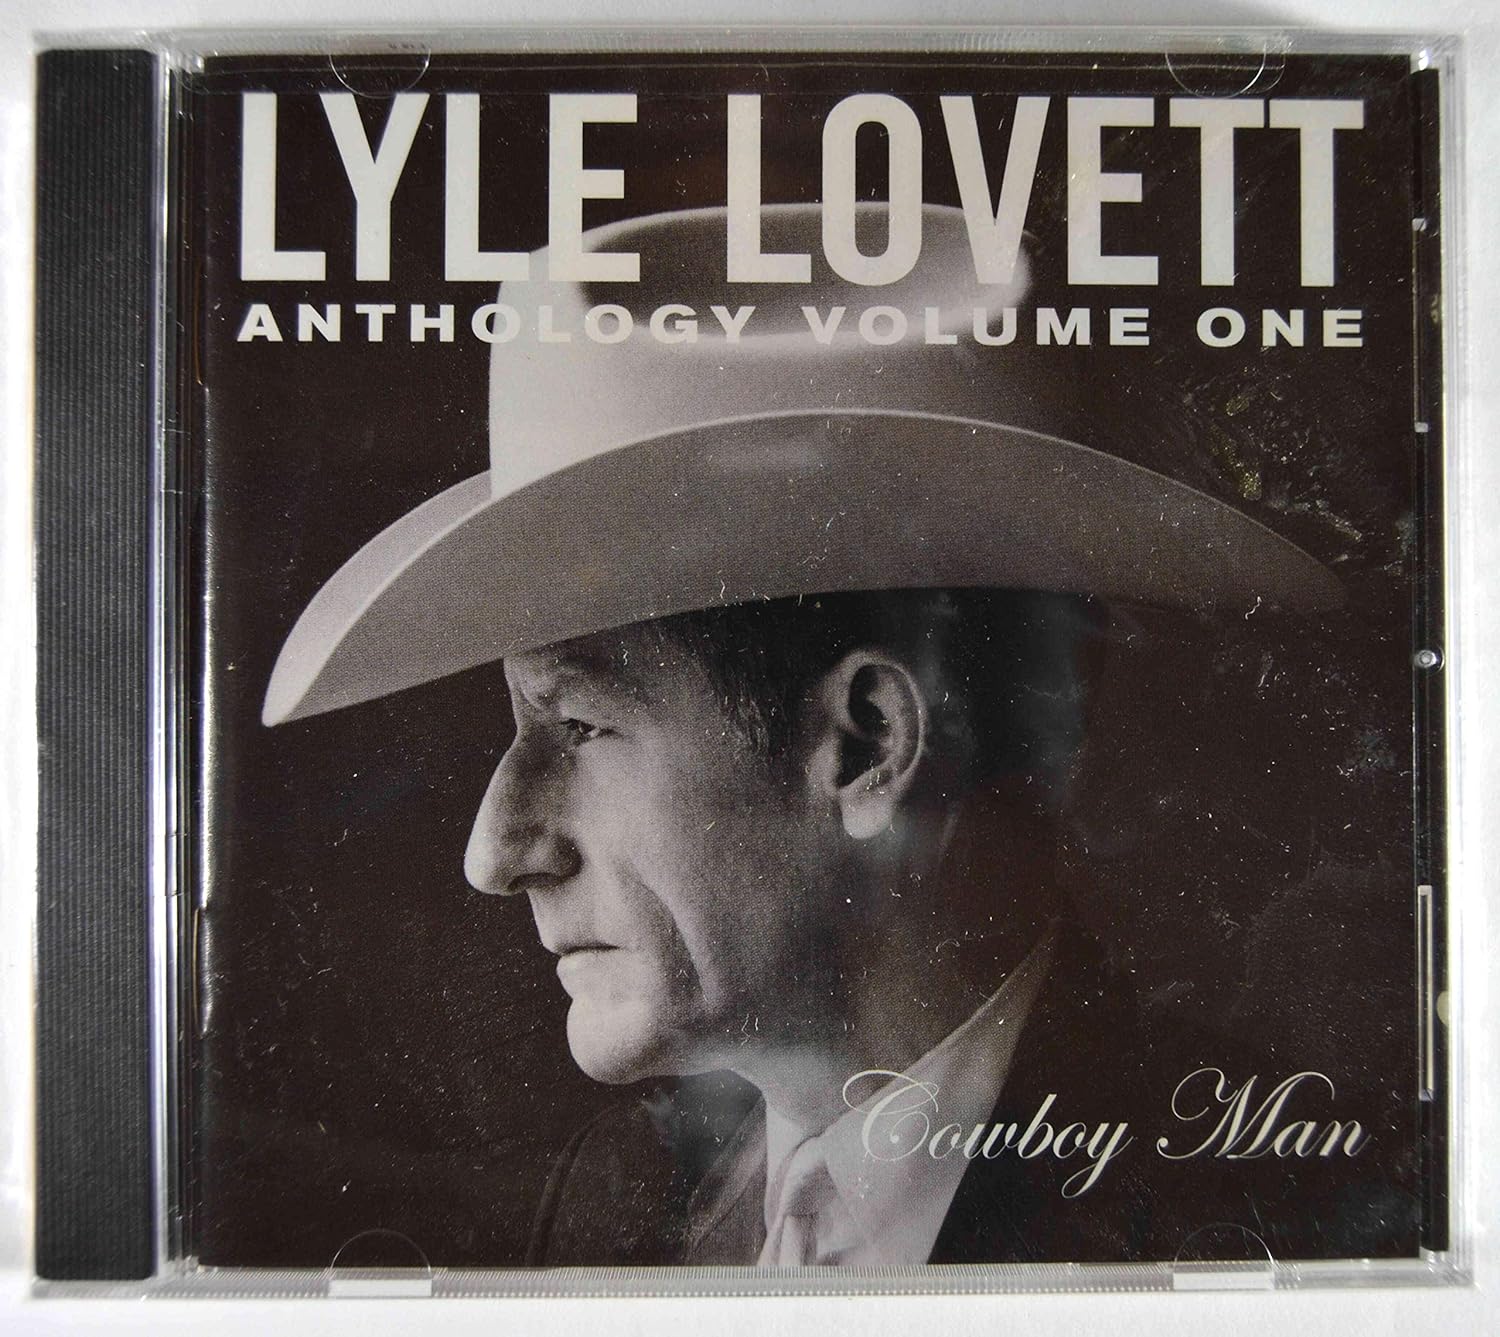 Lyle Lovett- Anthology Volume One: Cowboy Man